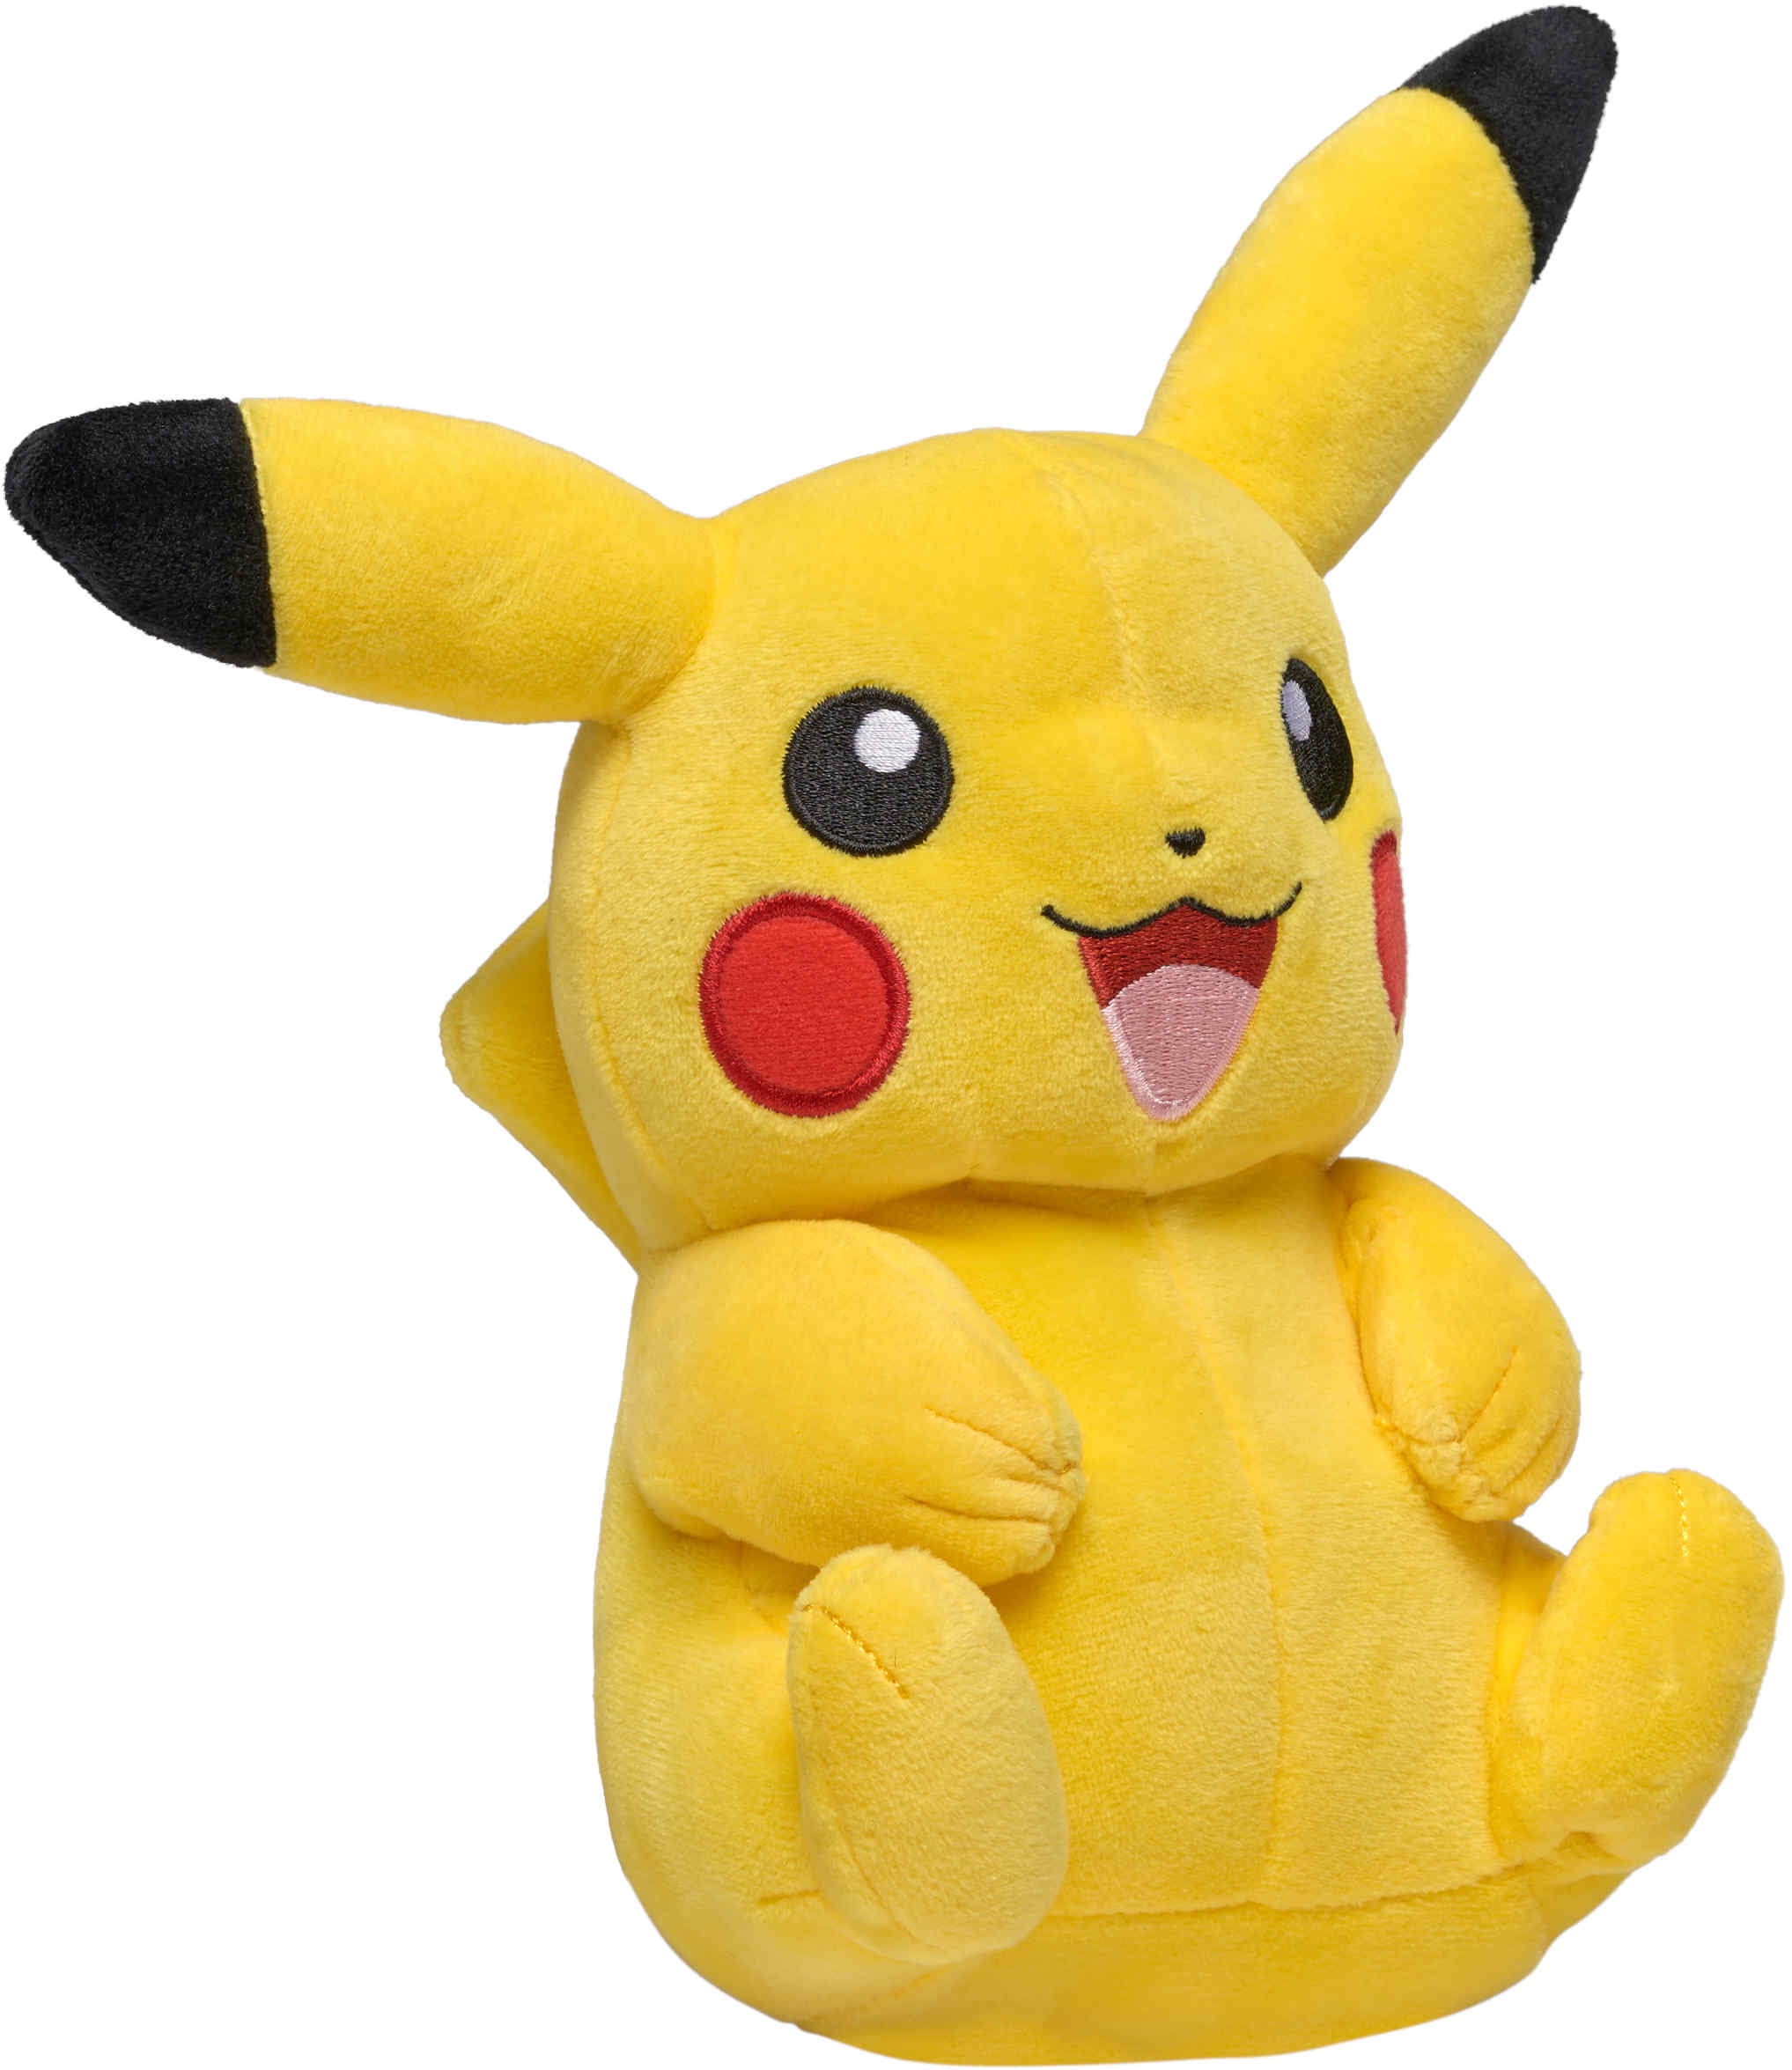 NEW Pokémon Pikachu Plush Stuffed Backpack Soft Doll Yellow Toy Character Bag 